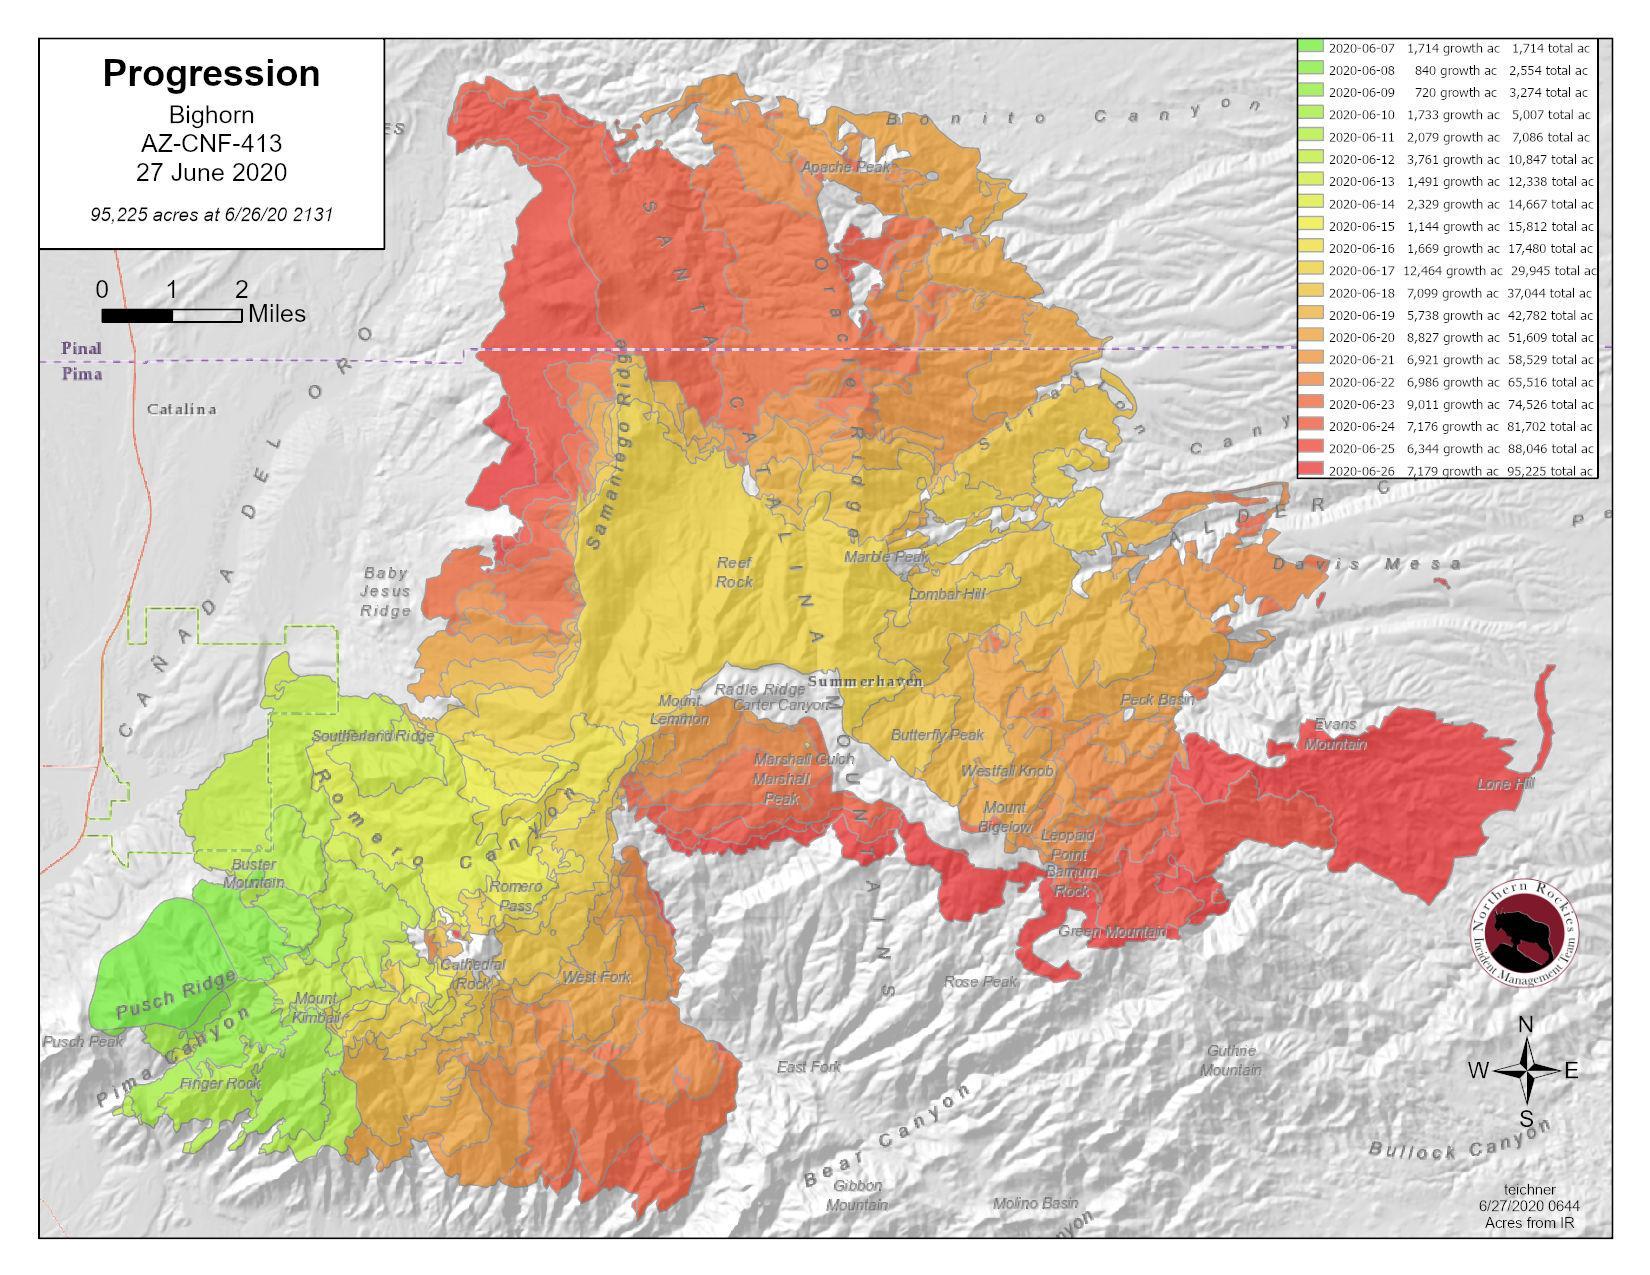 Bighorn Fire Progression Map 6-27-20